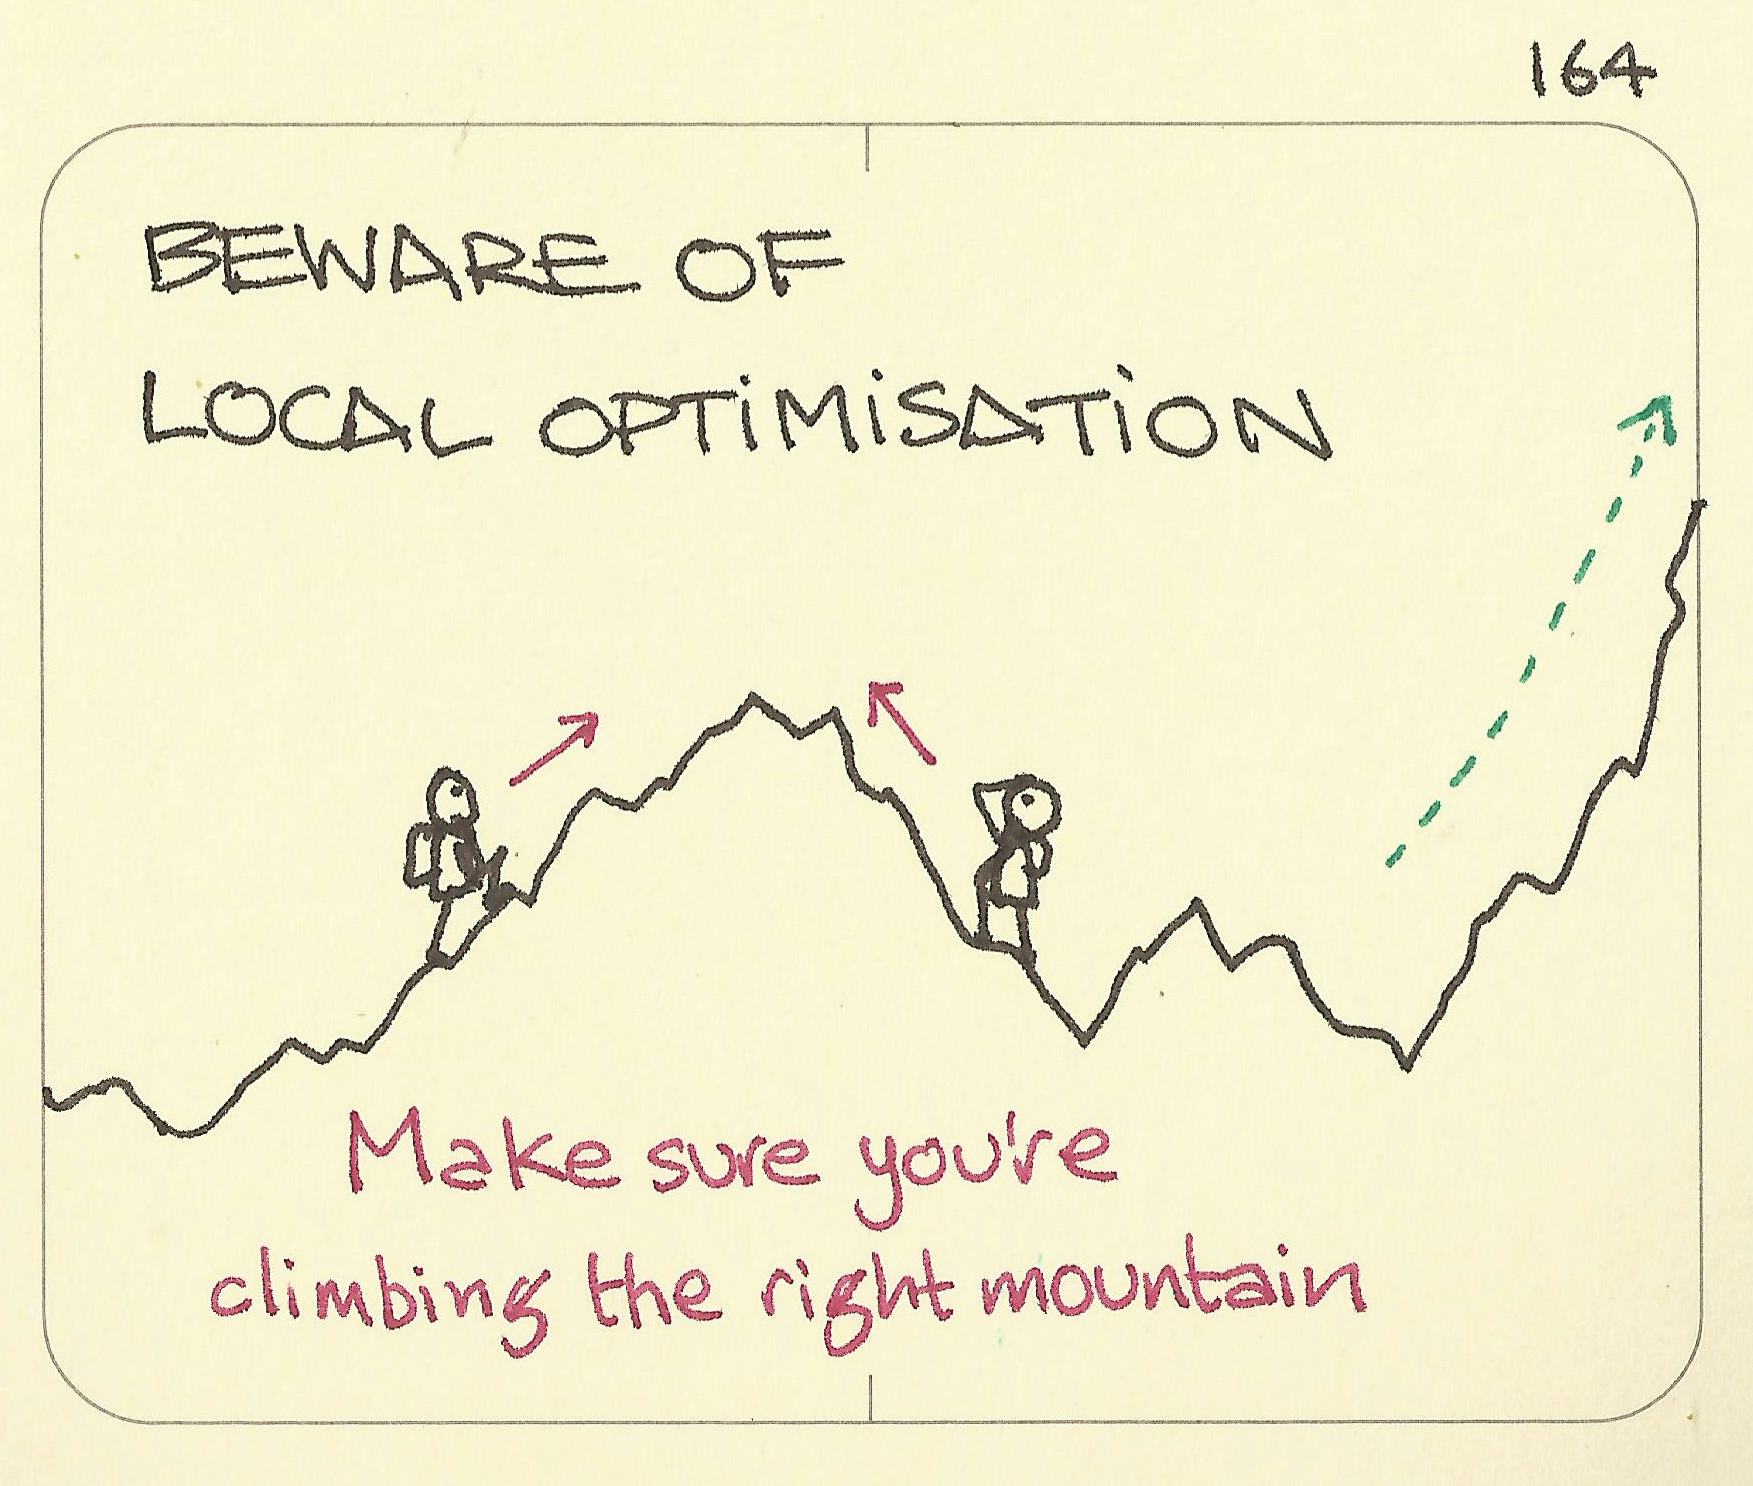 Beware of local optimisation - Sketchplanations